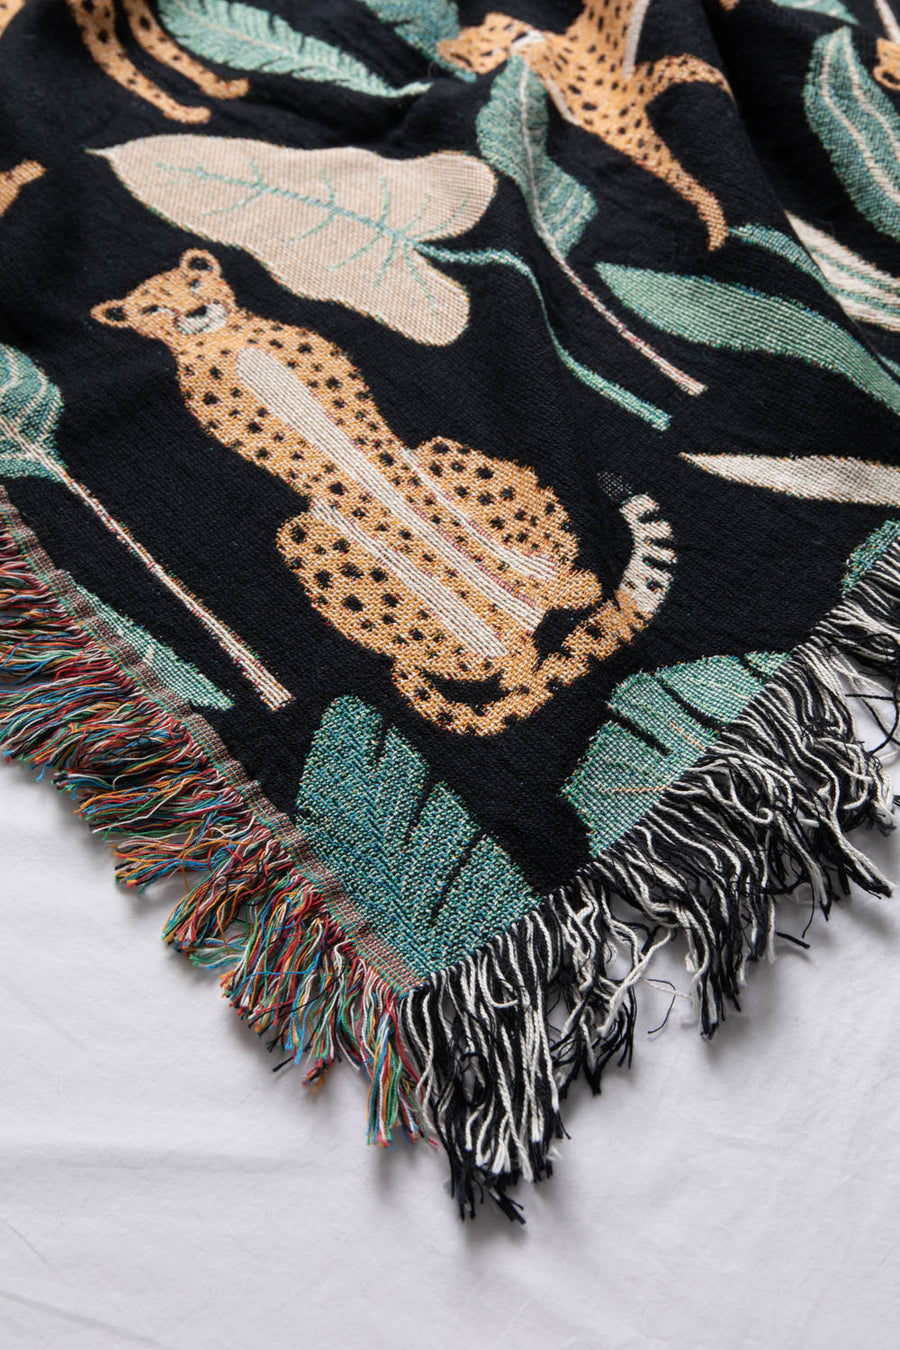 Leopard Jungle Black Throw Blanket Close Up